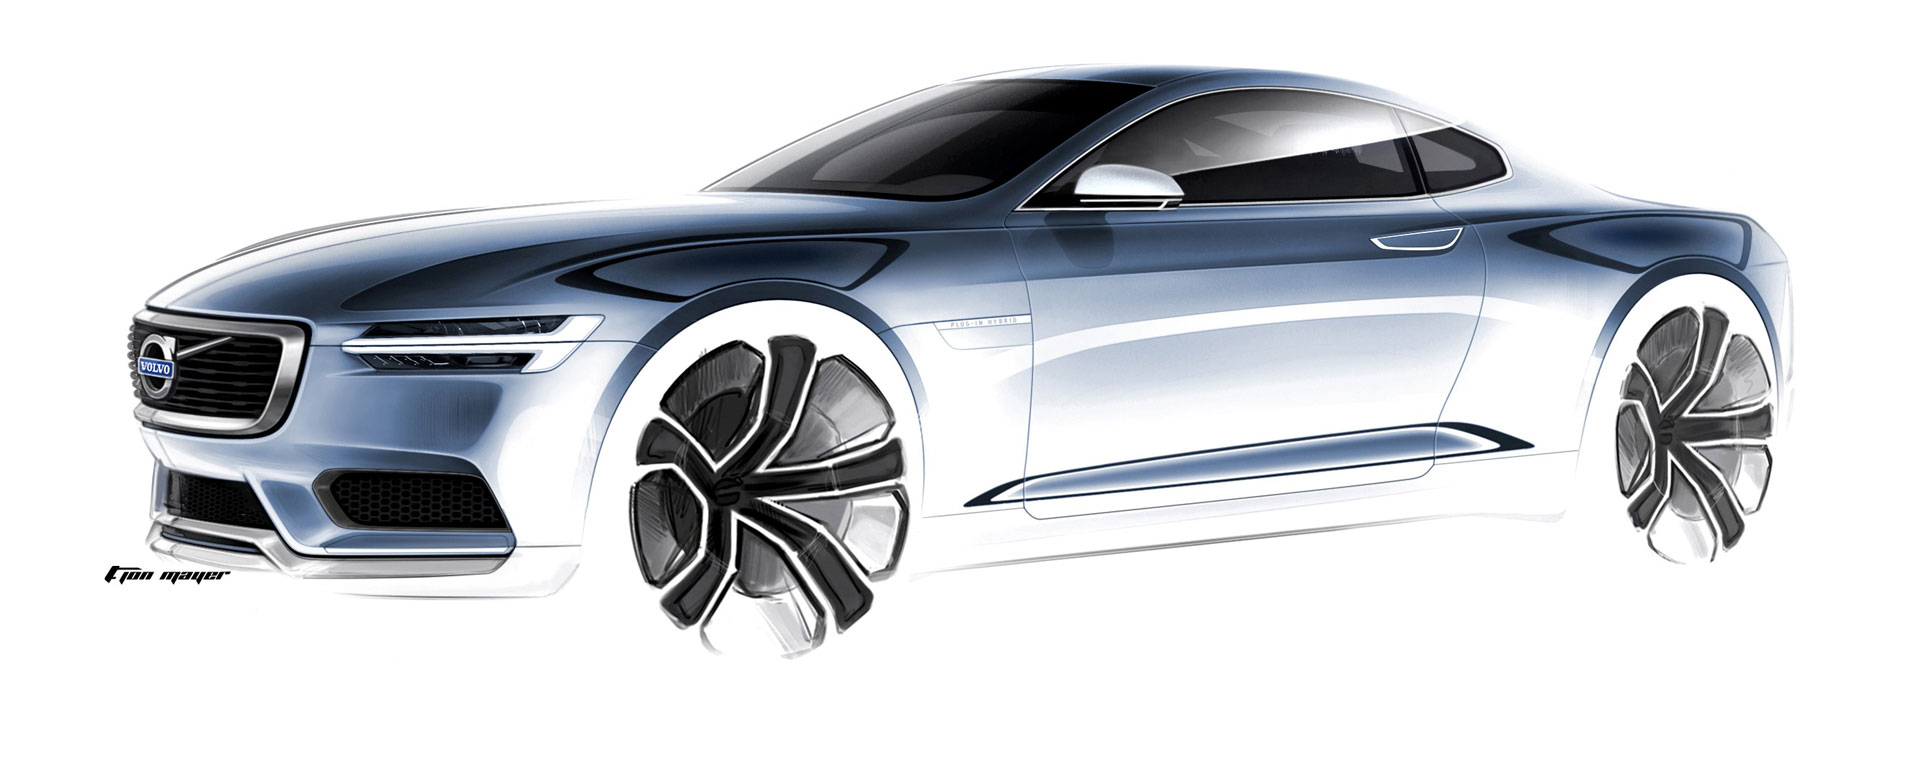 Volvo Concept Coupe, 2013 - Design Sketch